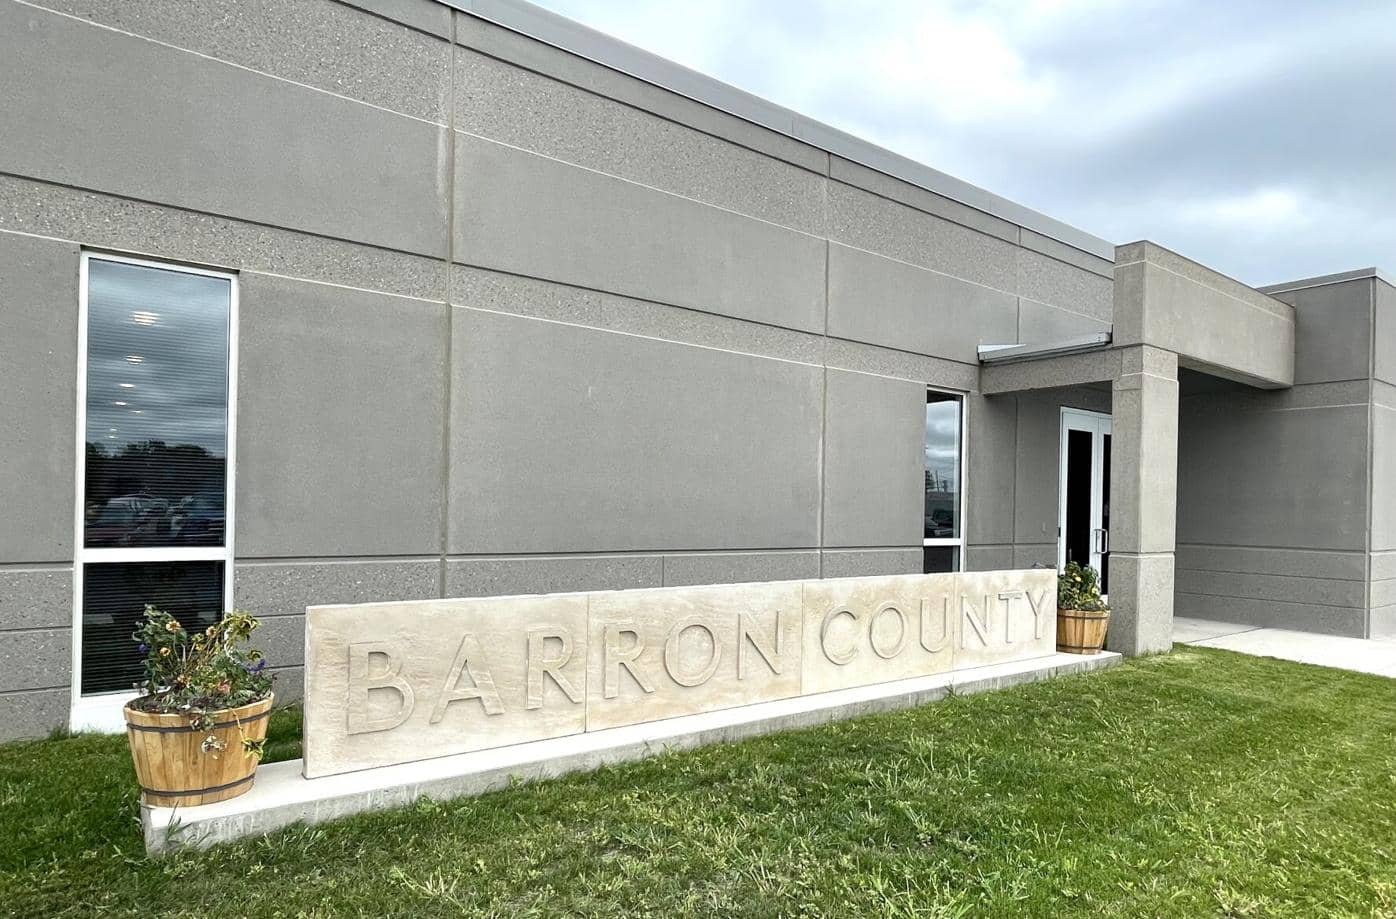 Image of Barron County Jail